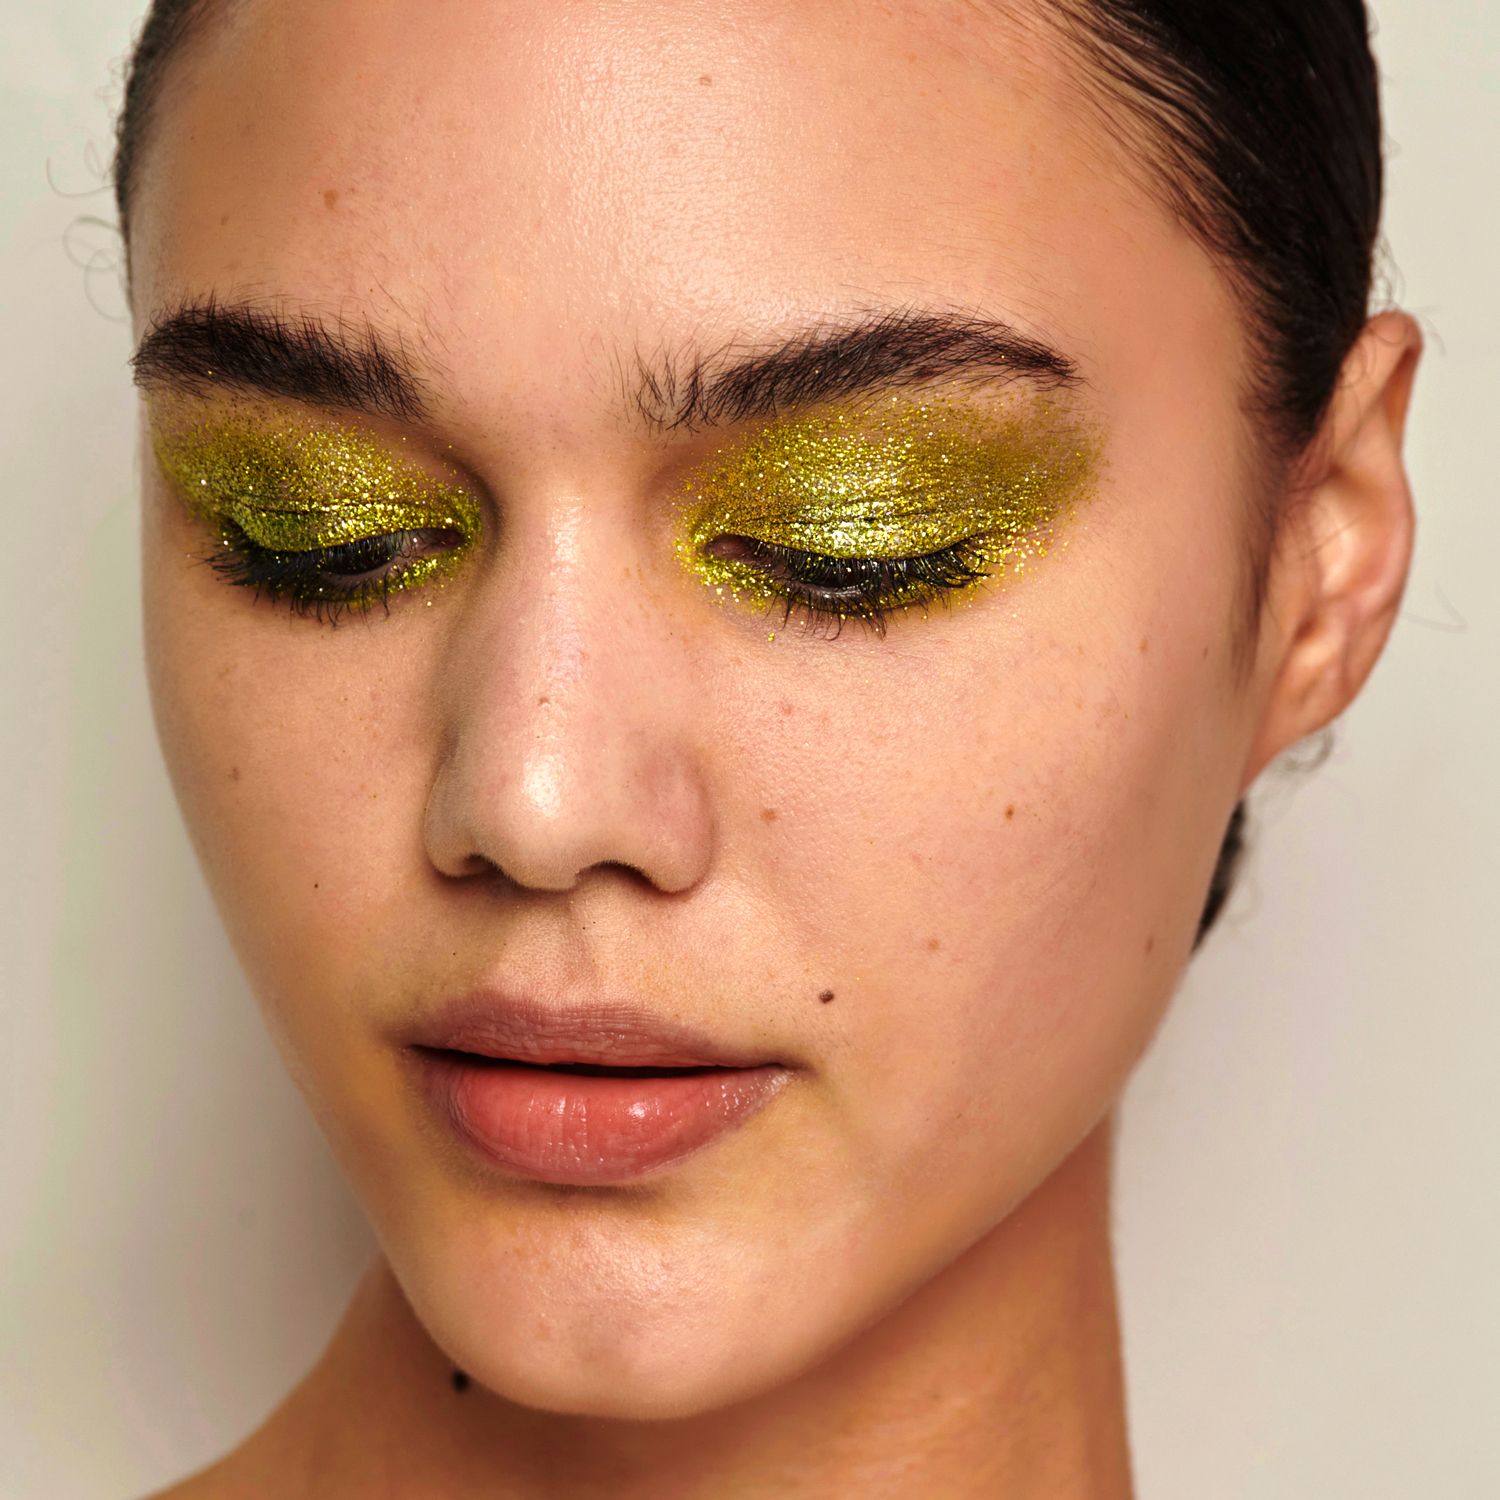 10 Best Glitter Eyeshadows – Sparkly & Glittery Shades that Last